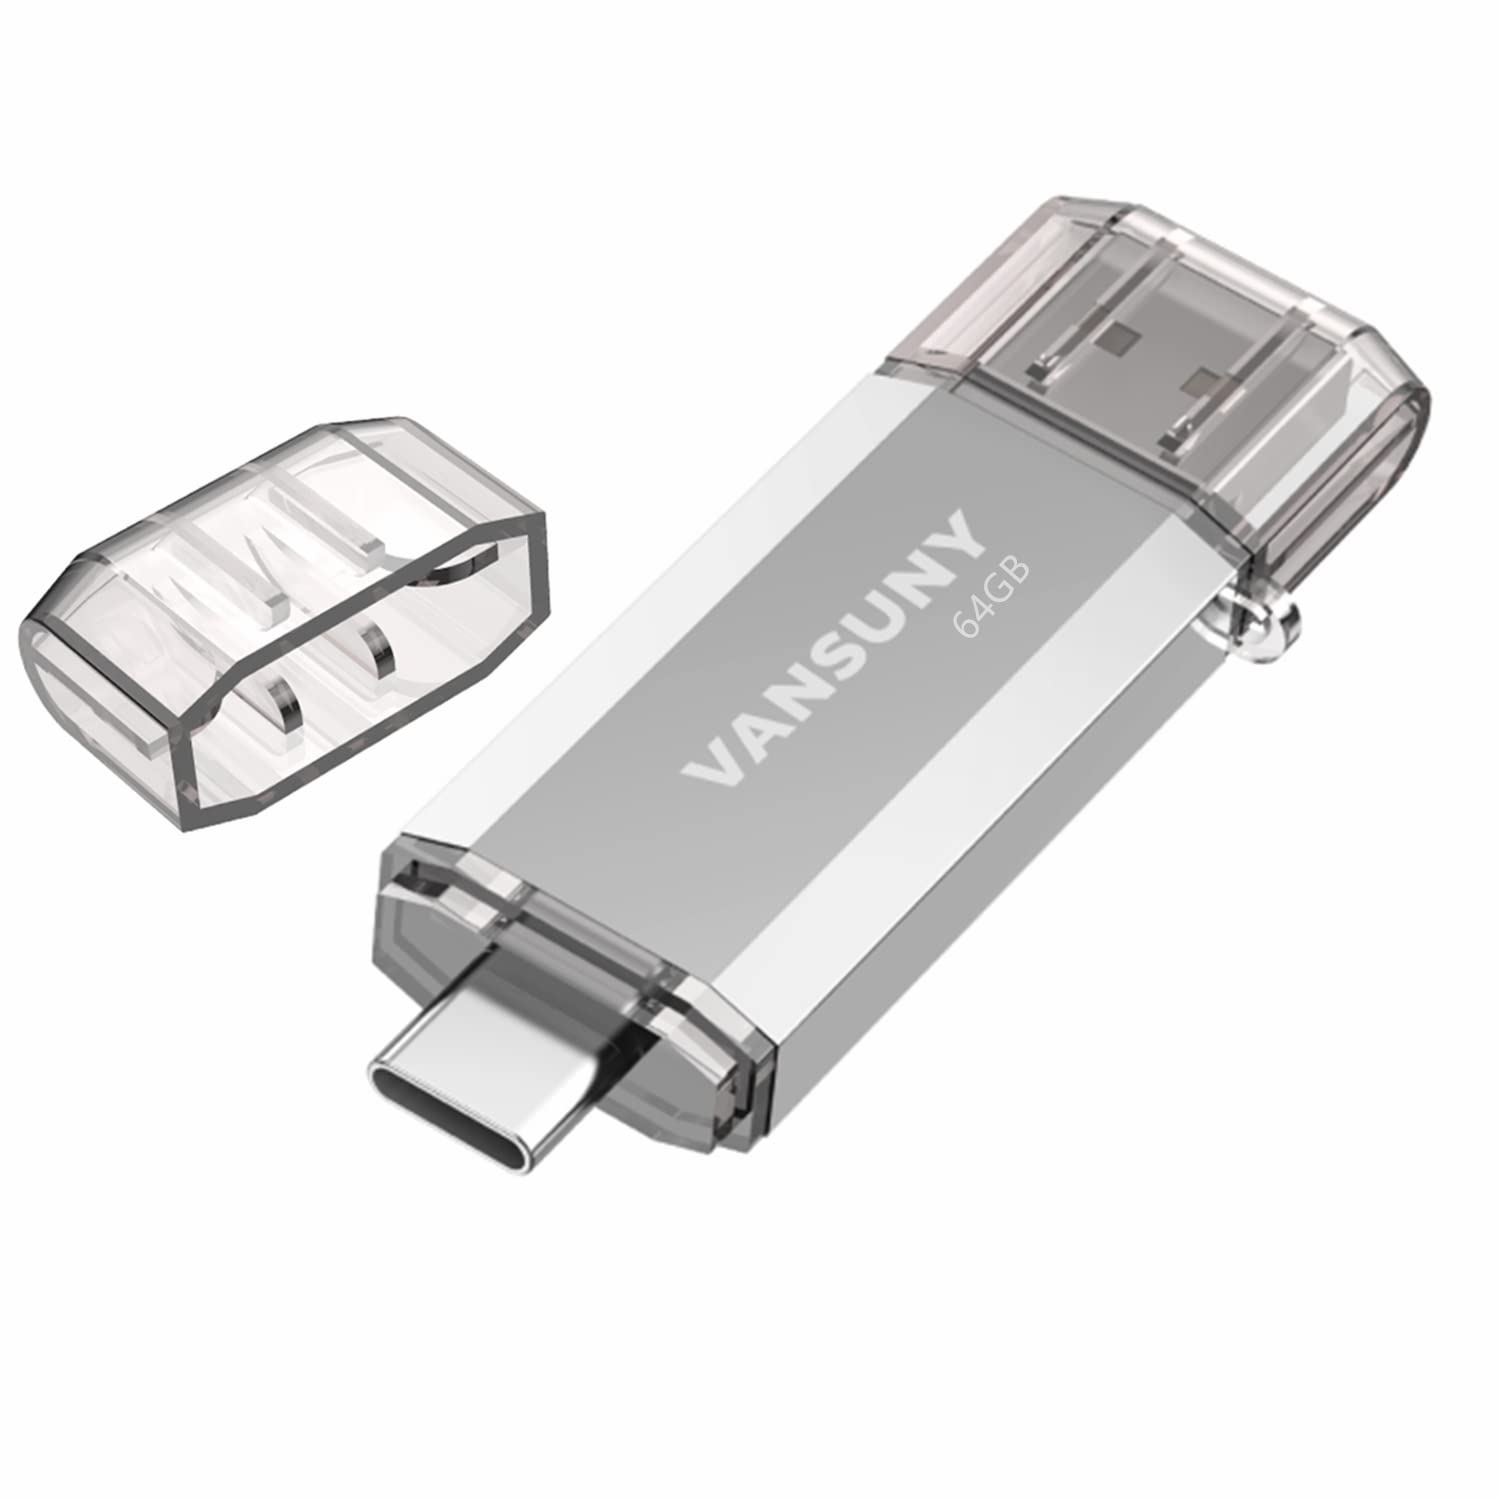 Vansuny USB Type-C 64GB ]f[^ USBtbVhCu 2in1 OTG USB 3.0 + USB CXeBbN fA ^CvC 64MK e ()